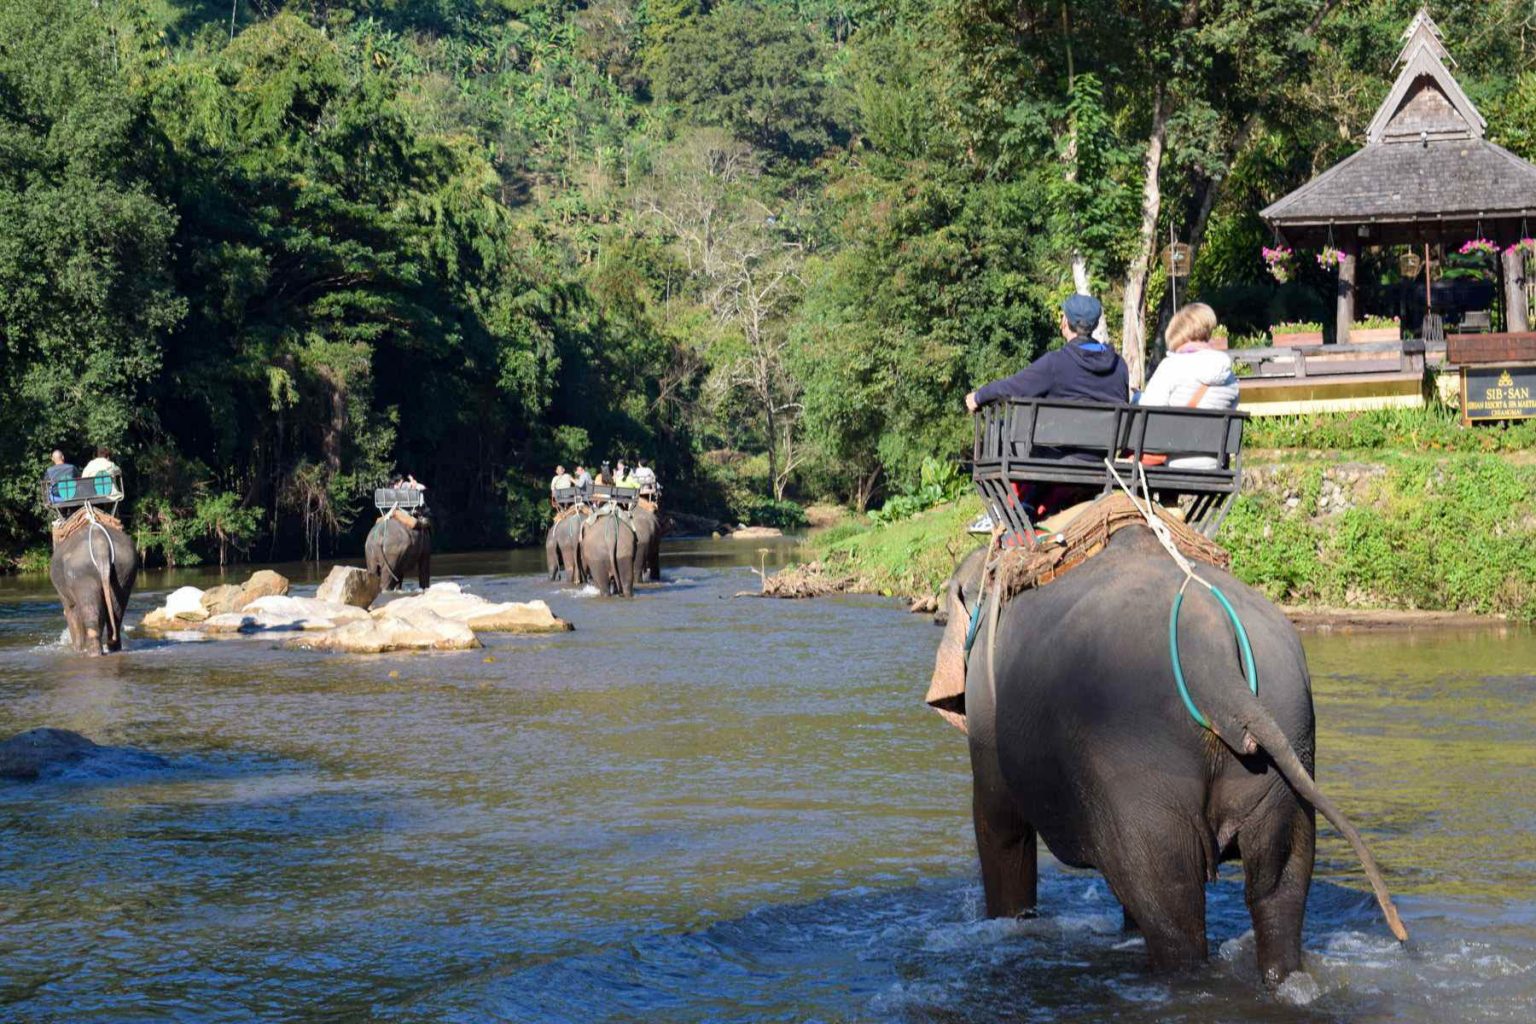 Foto degli elefanti a Chiang Mai, Thailandia.